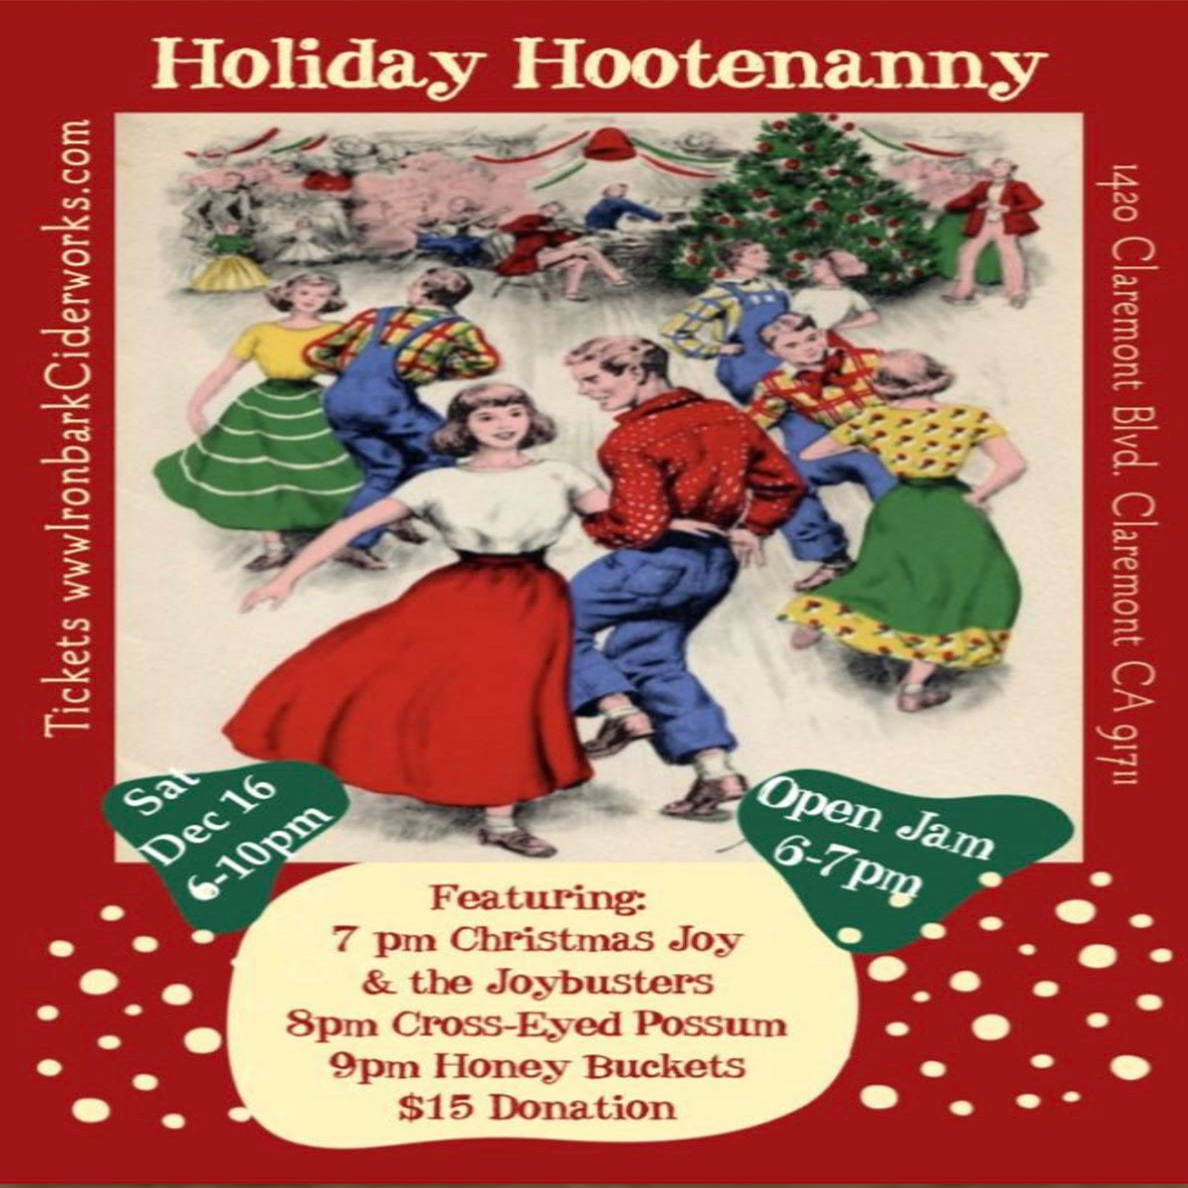 Holiday Hootenanny at Ironbark Ciderworks in Claremont, Sat Dec 16th 6pm